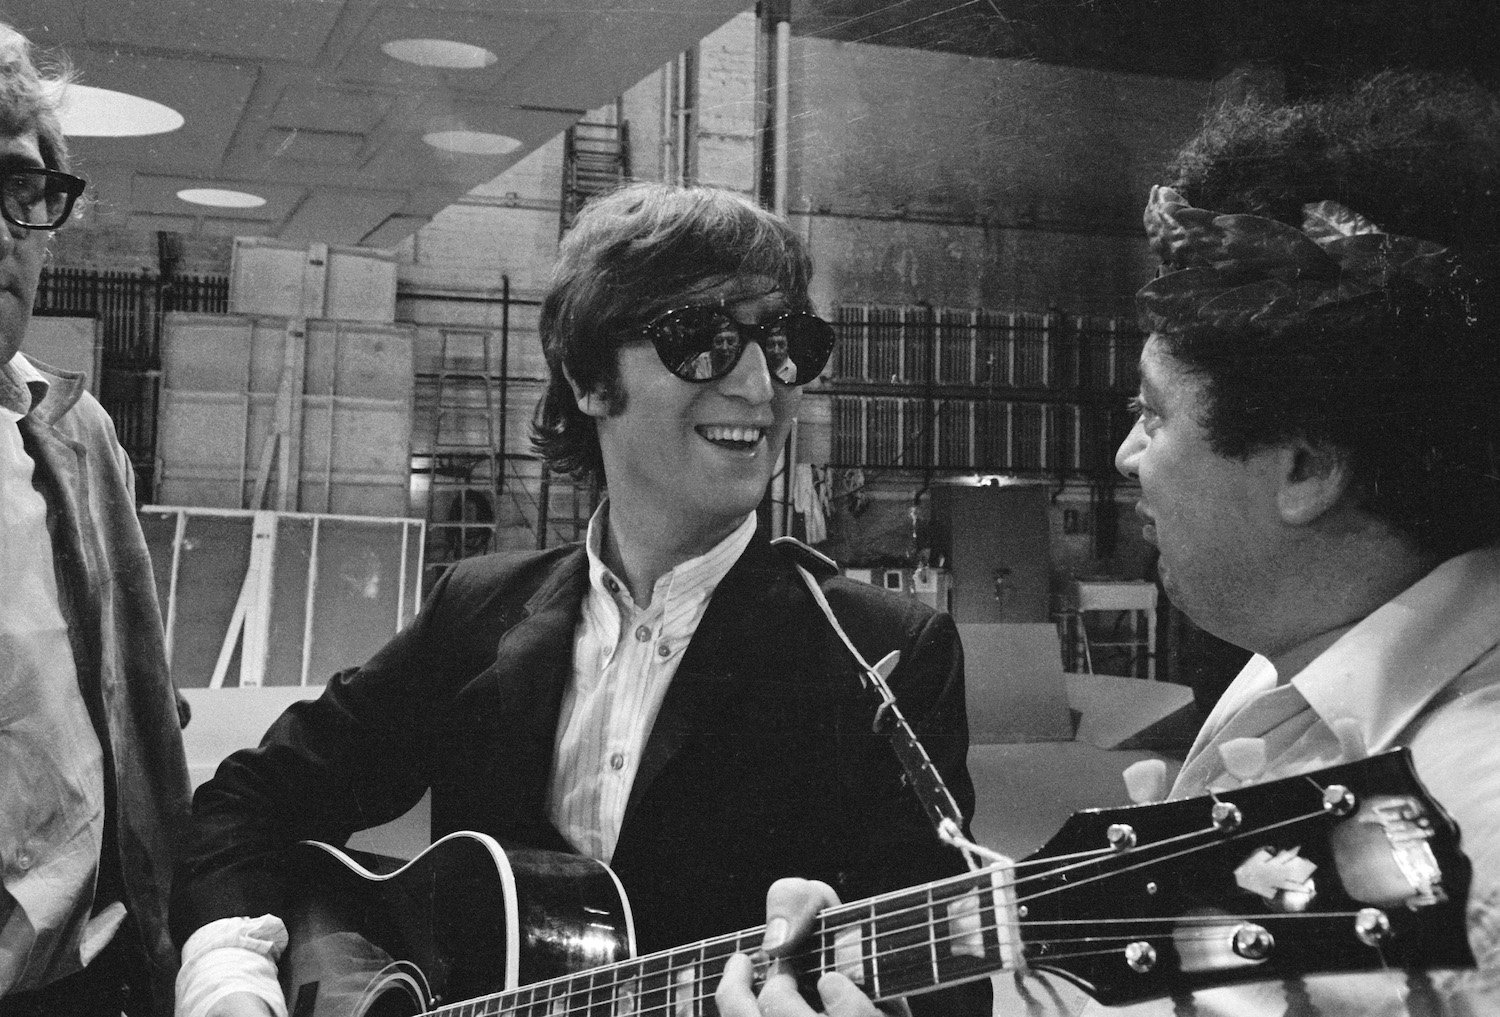 John Lennon and The Beatles perform on The Ed Sullivan Show